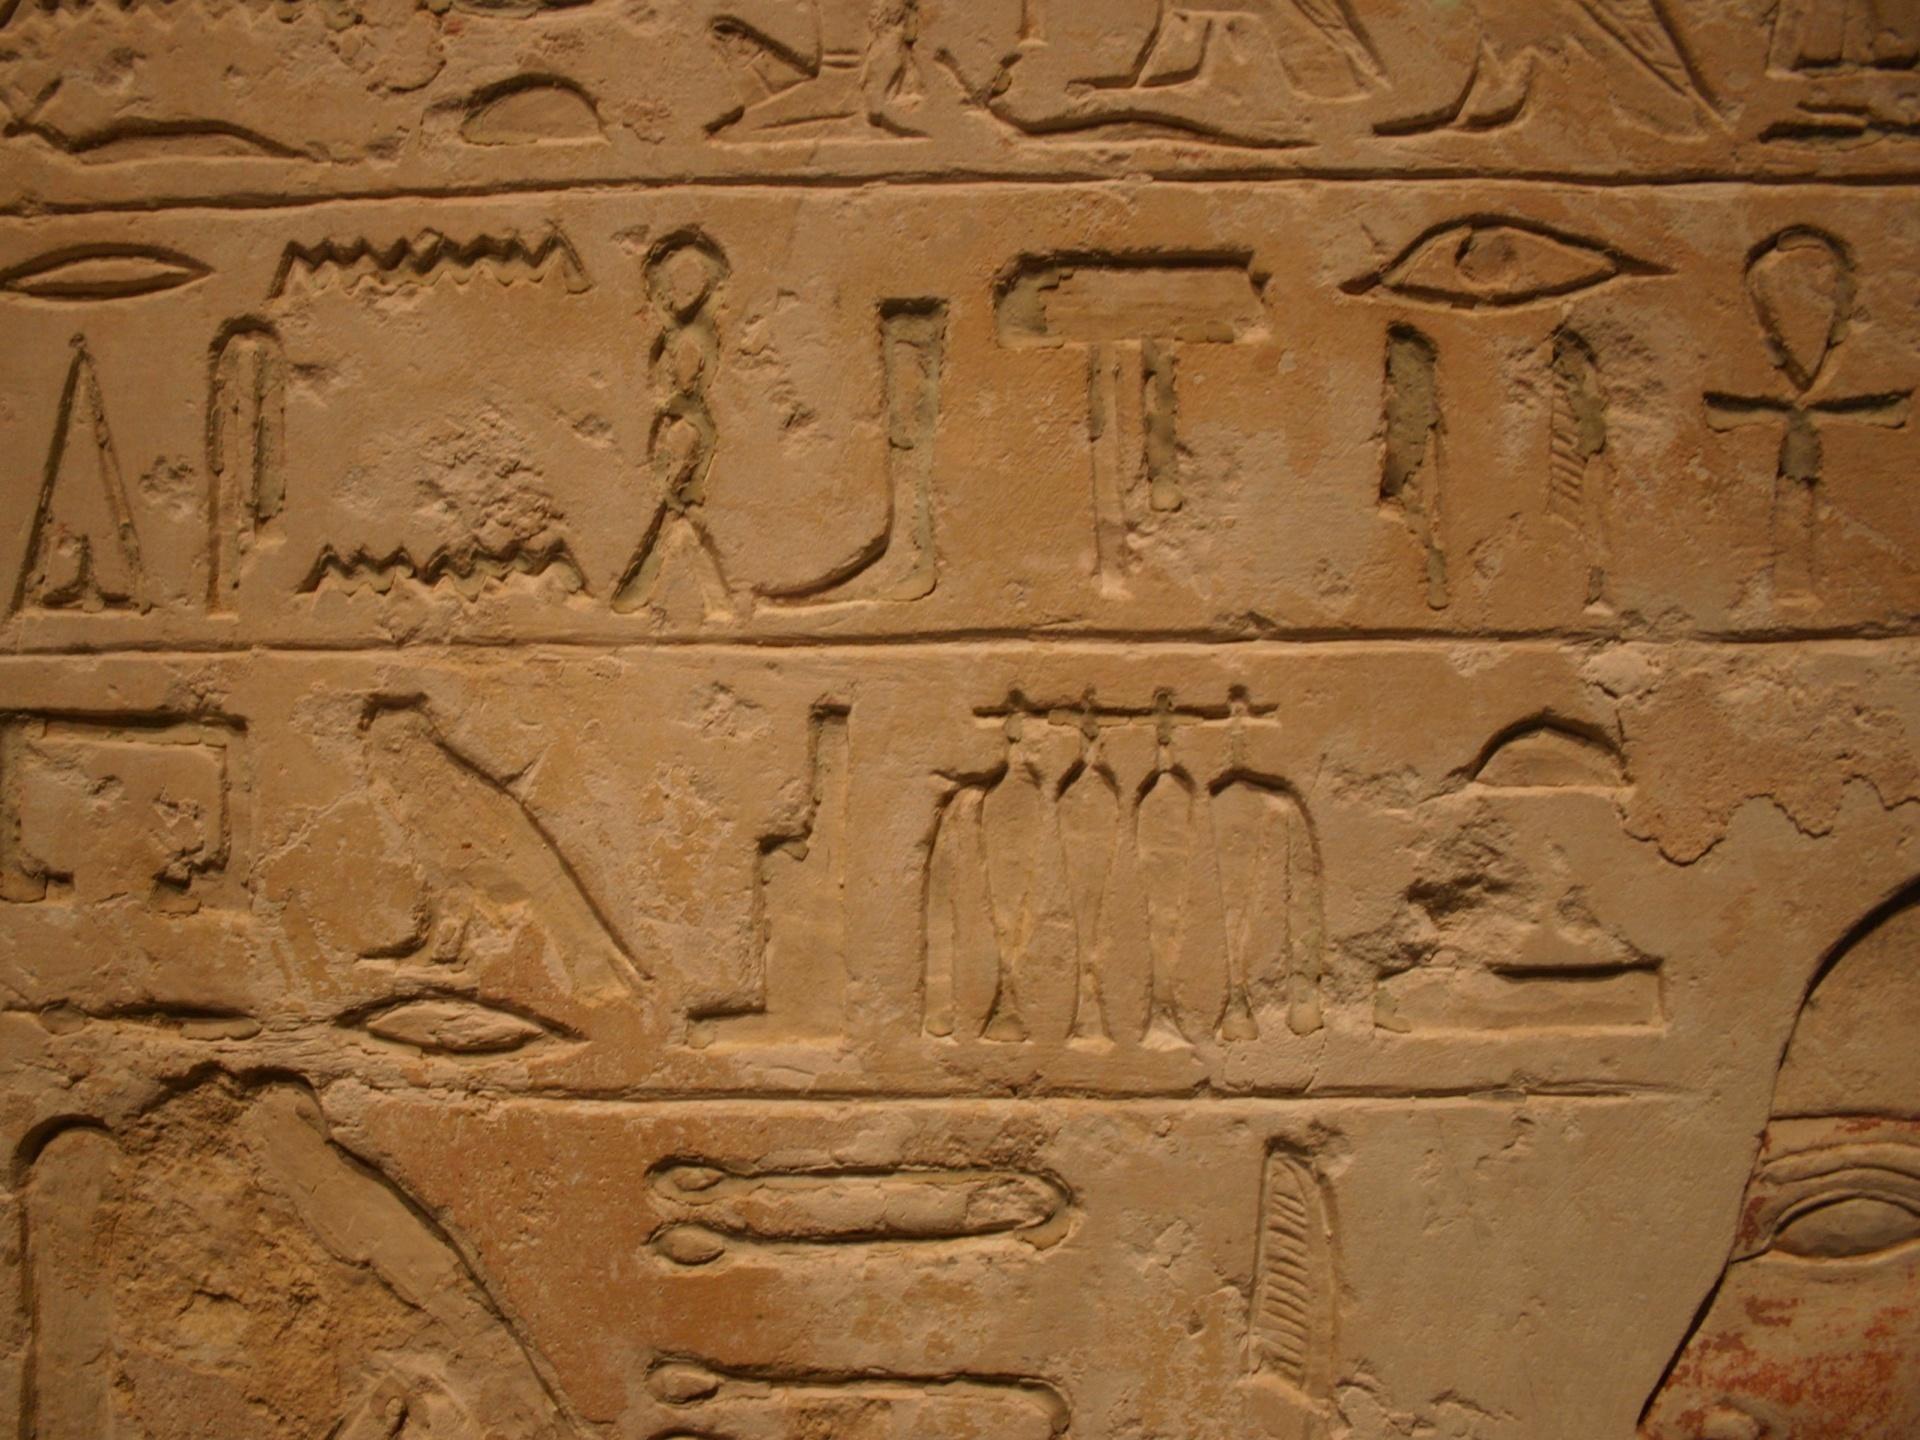 Hieroglyphics royalty free